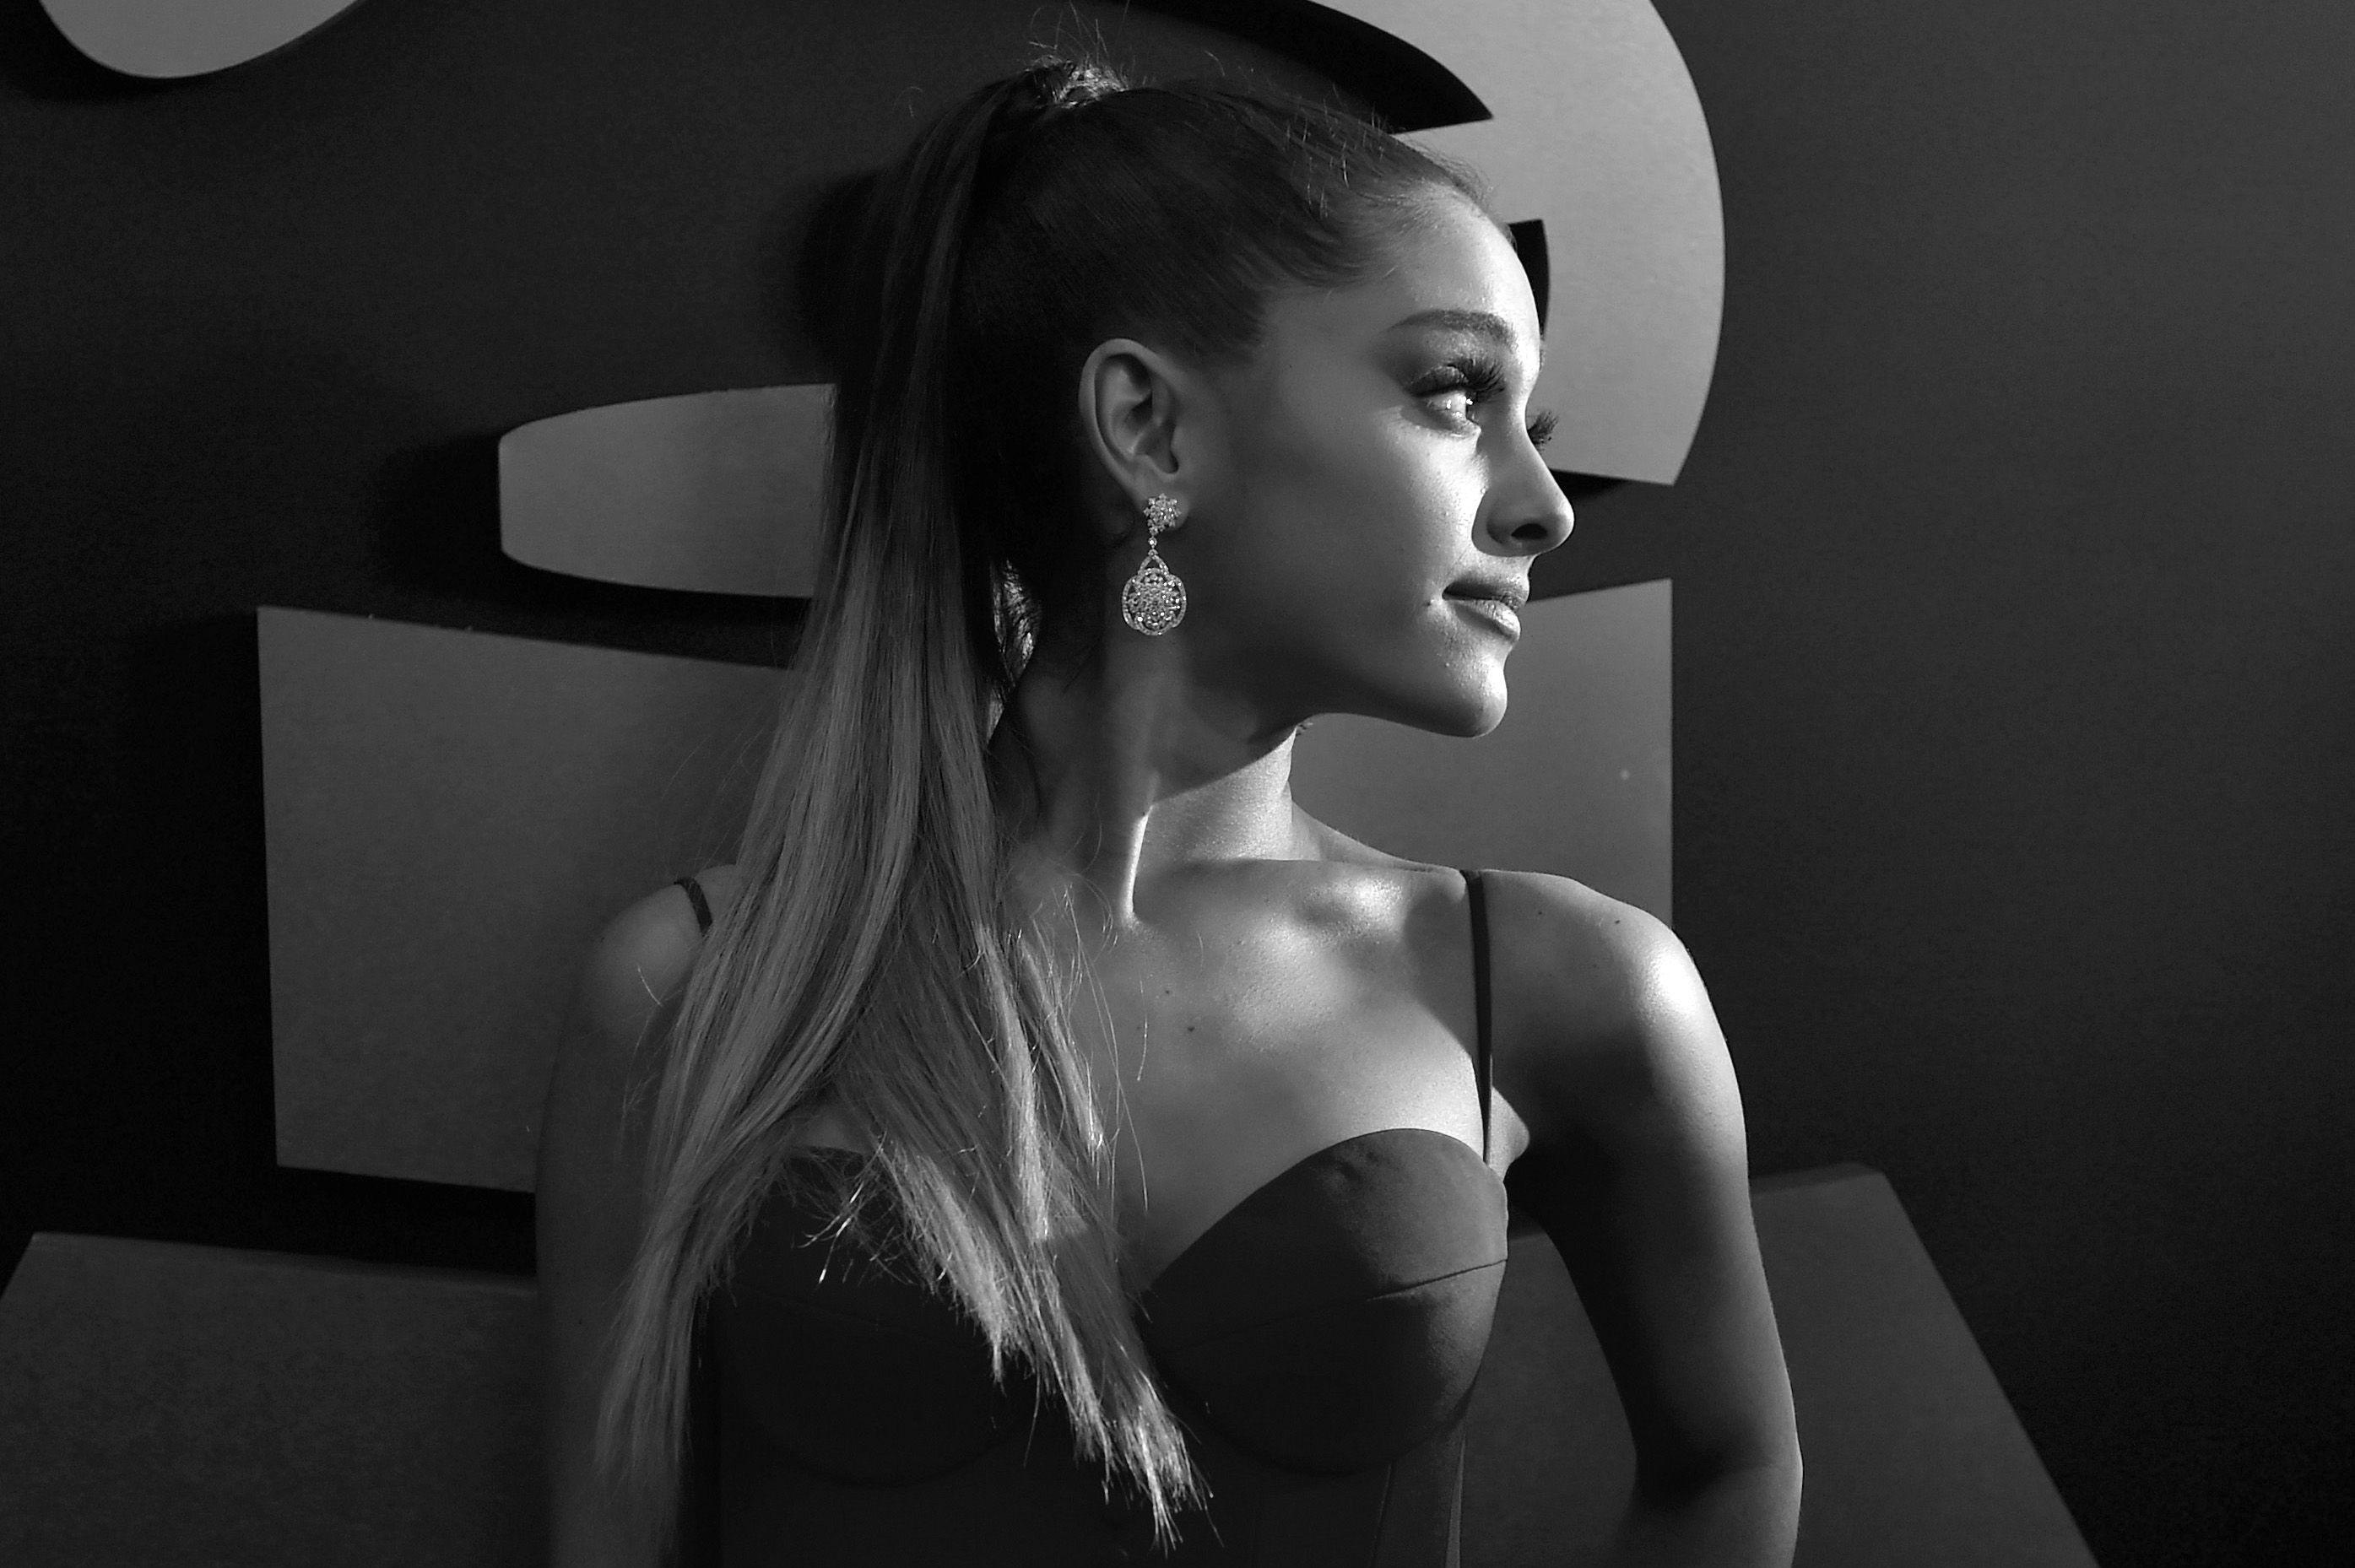 Ariana Grande Wallpapers Top Free Ariana Grande Backgrounds Wallpaperaccess